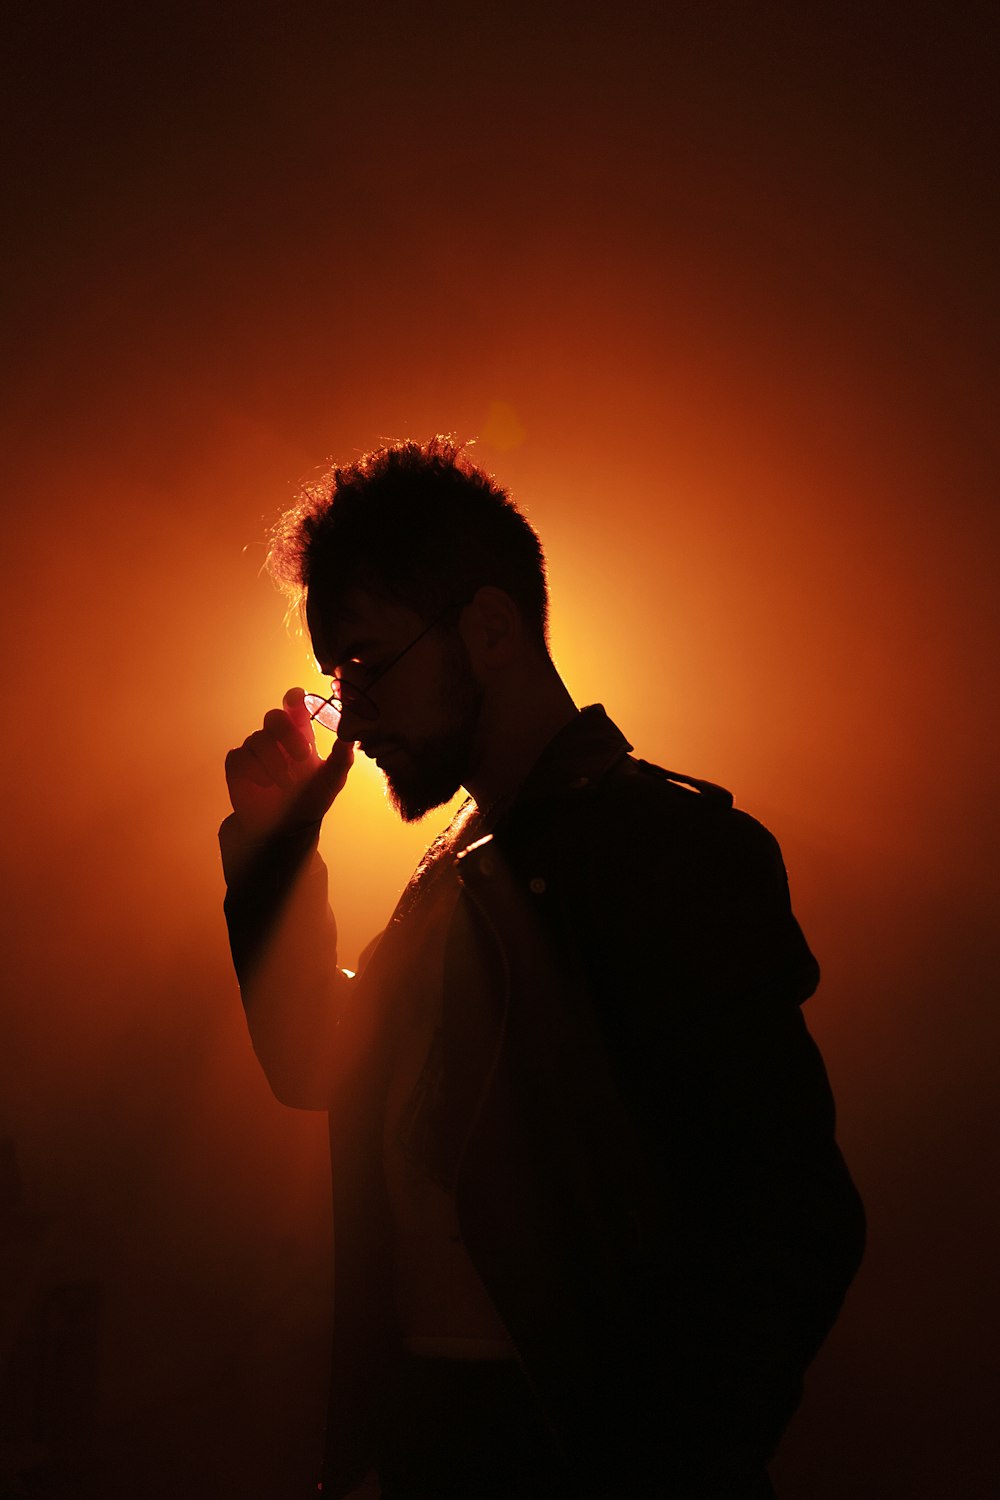 a silhouette of a man smoking a cigarette